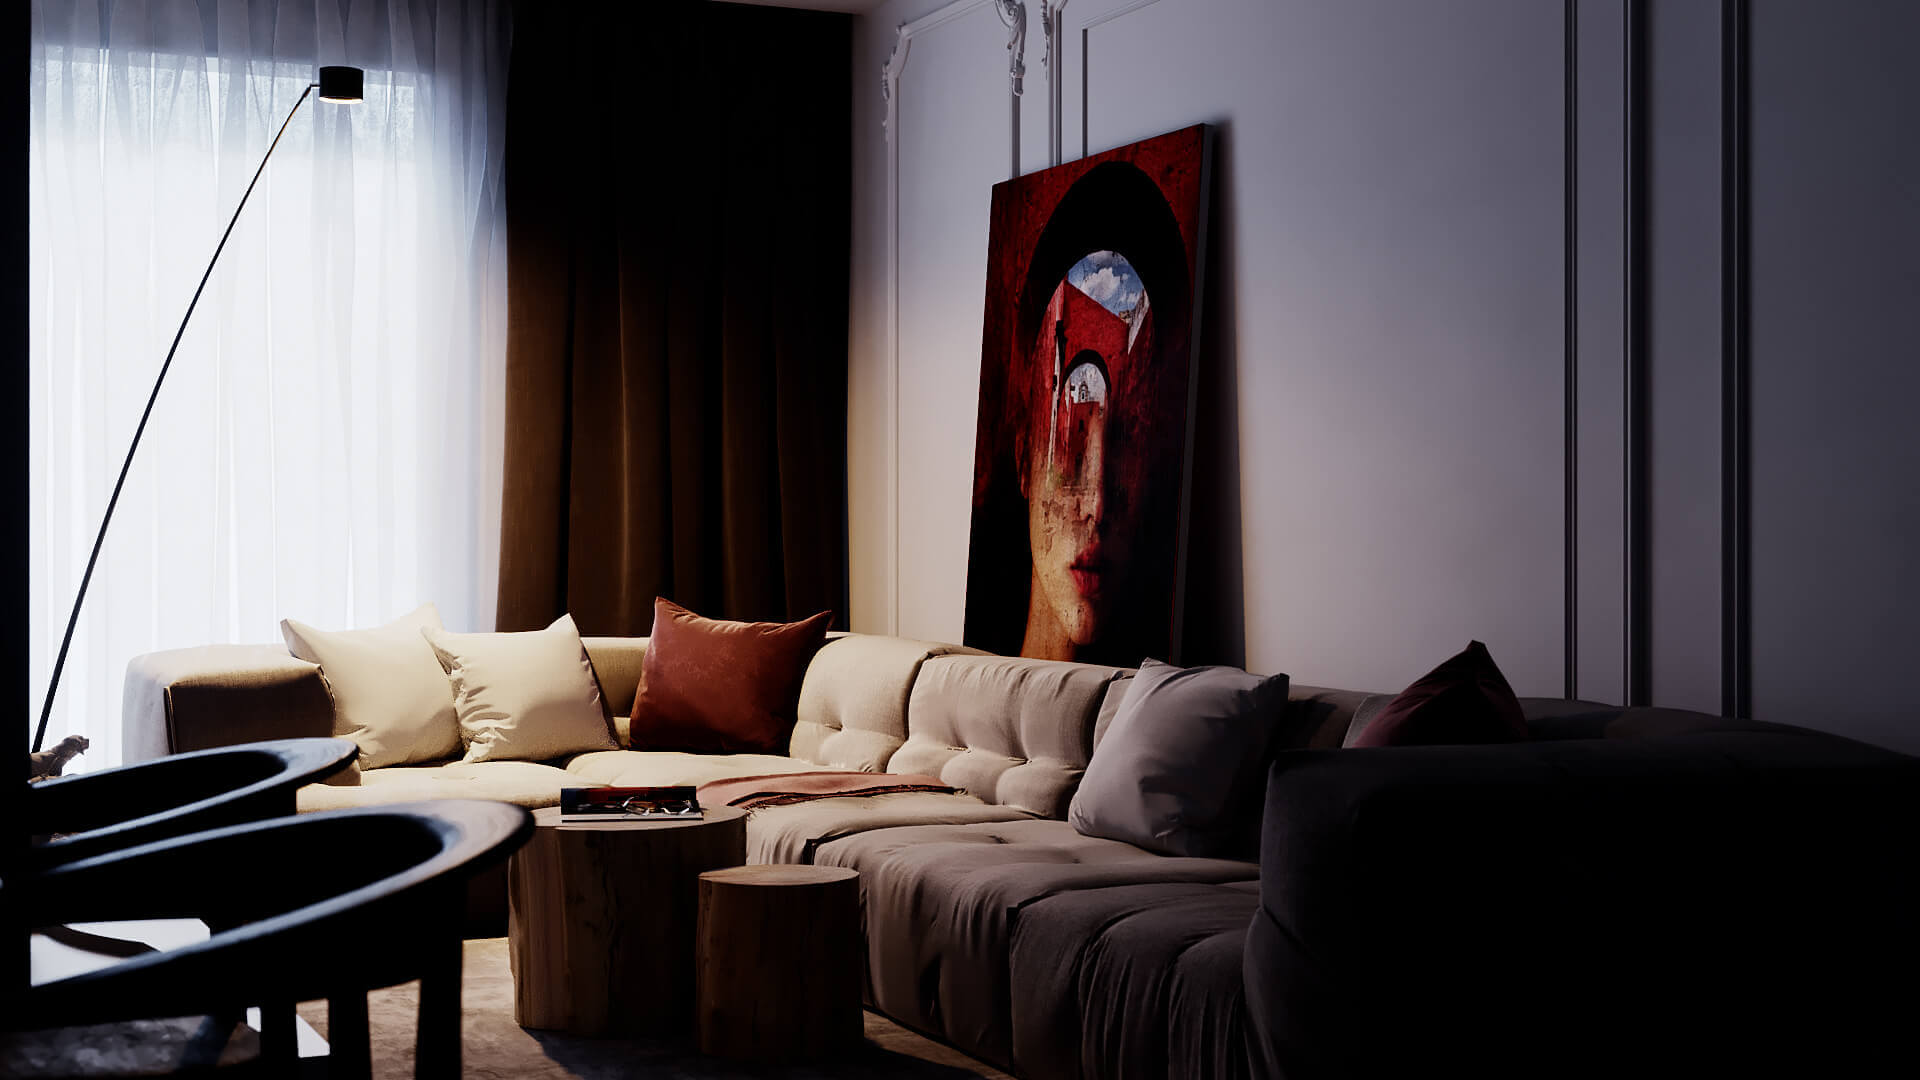 Bernardazzi Apartment living room couch cozy - cgi visualization